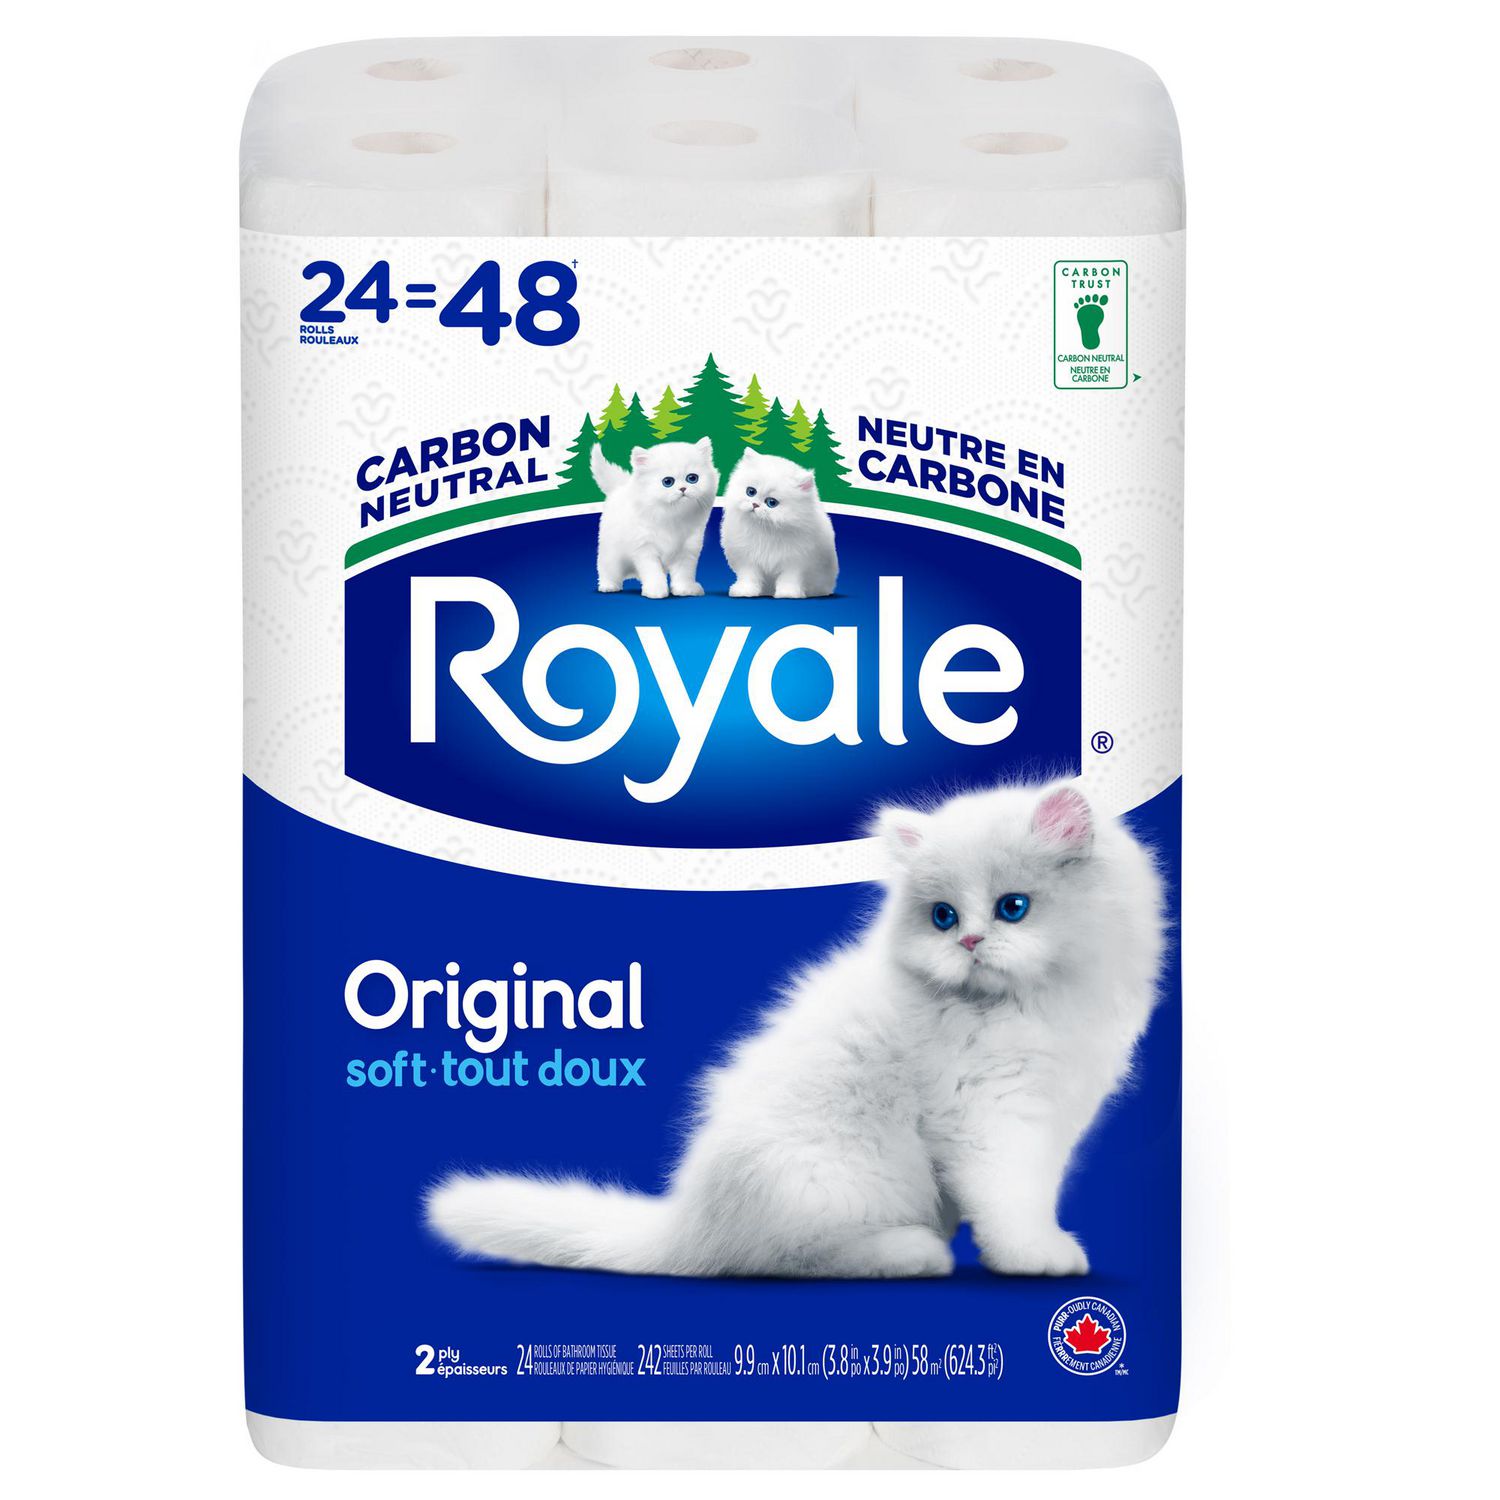 Royale Original Toilet Paper, 24 Equal 48 Bathroom tissue rolls, 2